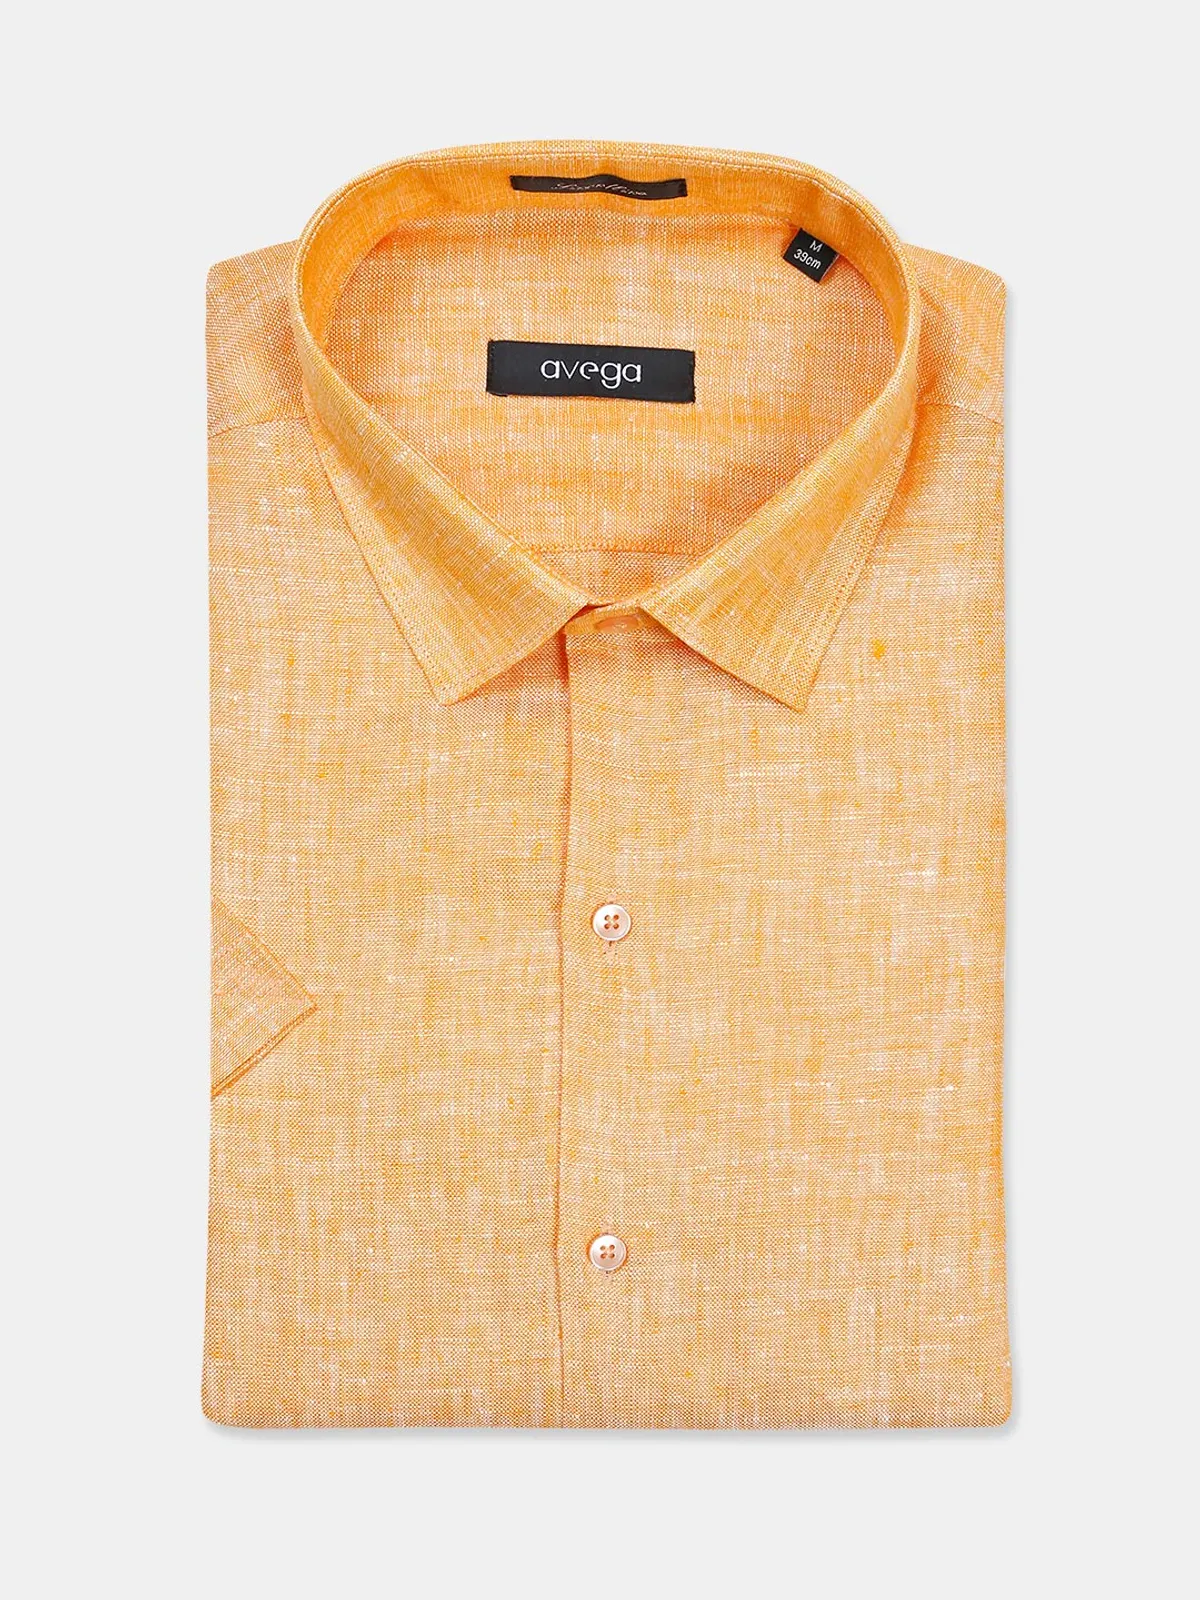 Avega formal wear solid orange linen shirt